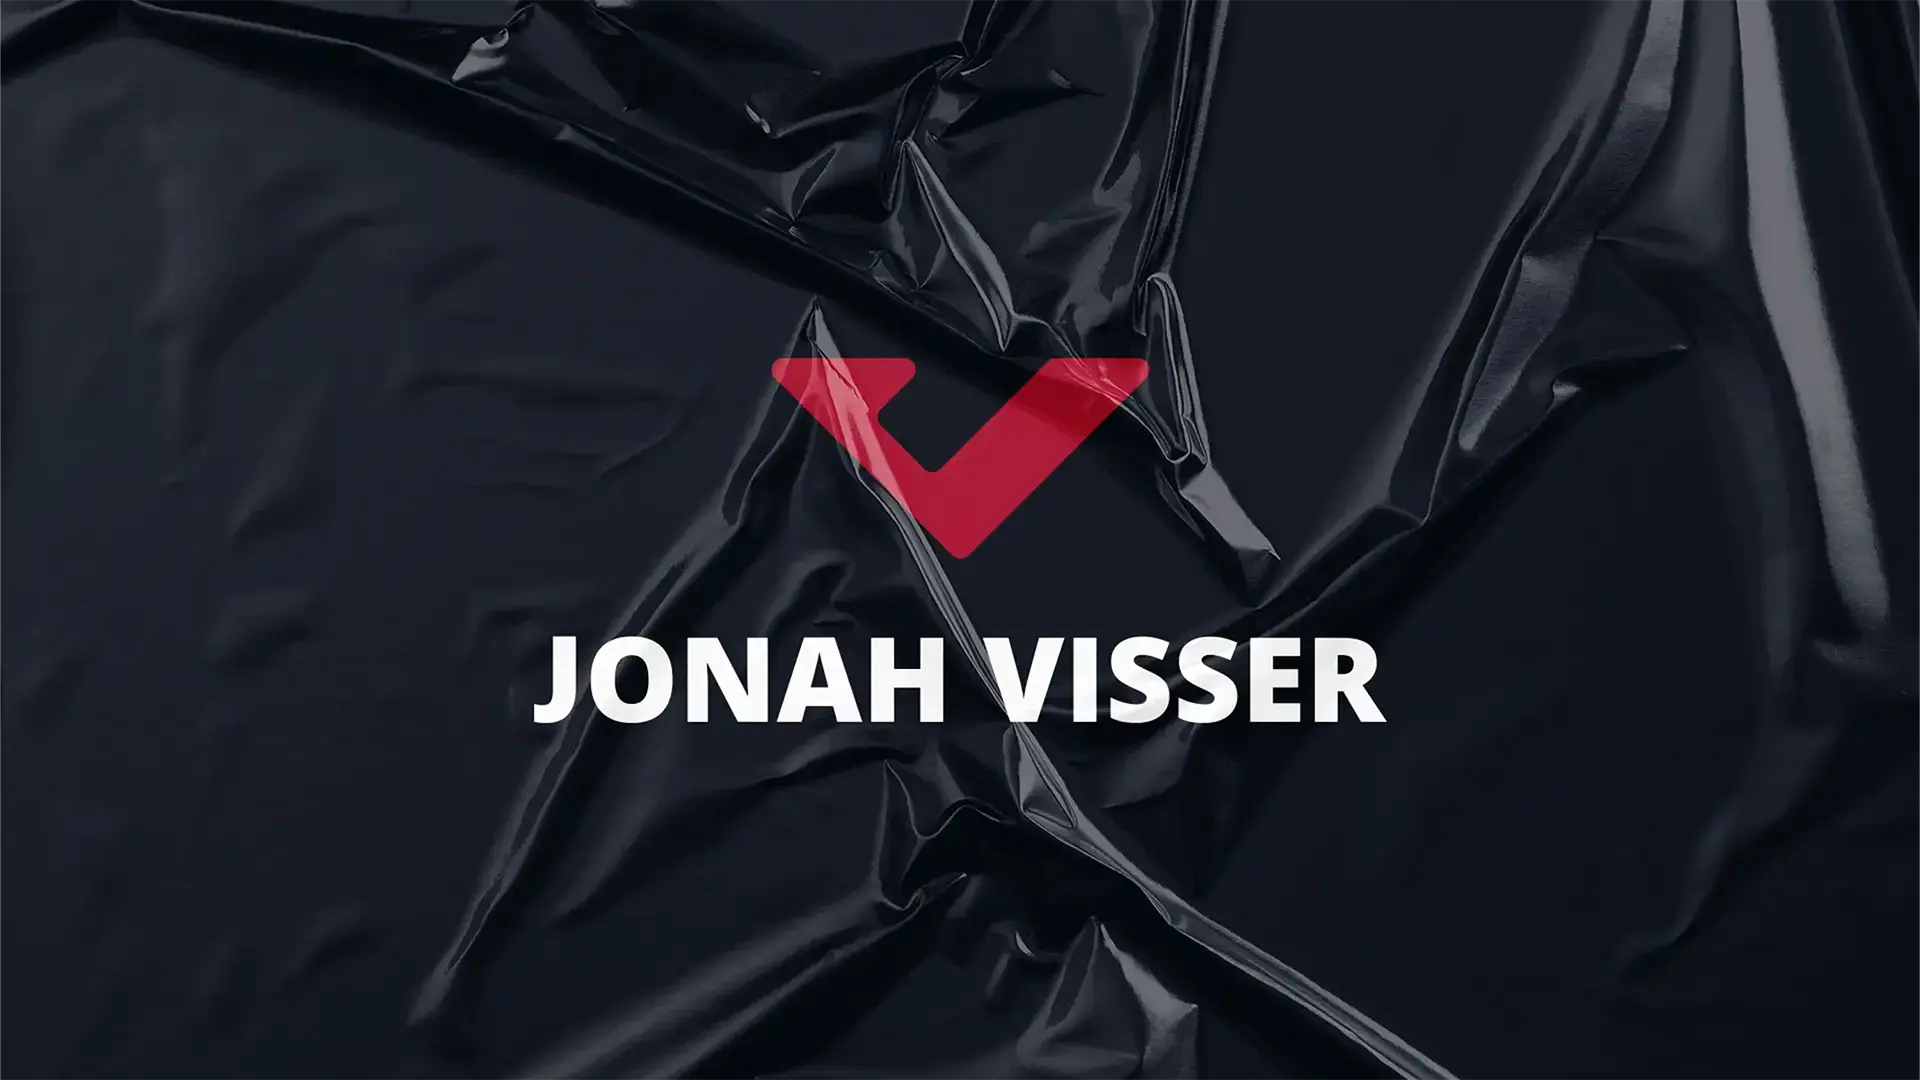 Jonah Visser's visual identity project case study